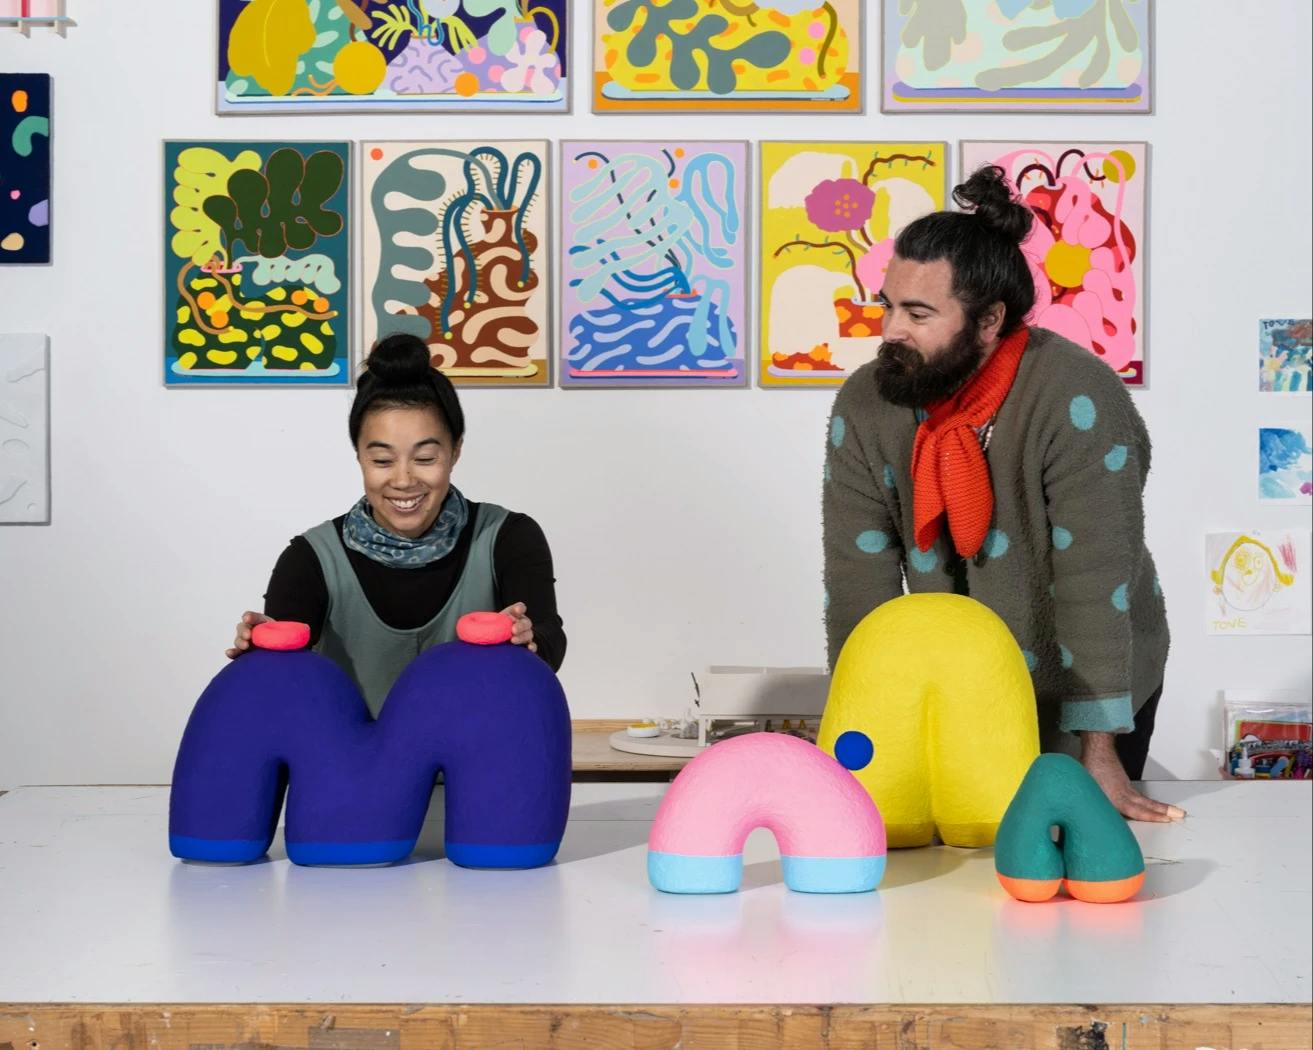 Artists Adam Frezza and Terri Chiao, known as CHIAOZZA, inside their studio.